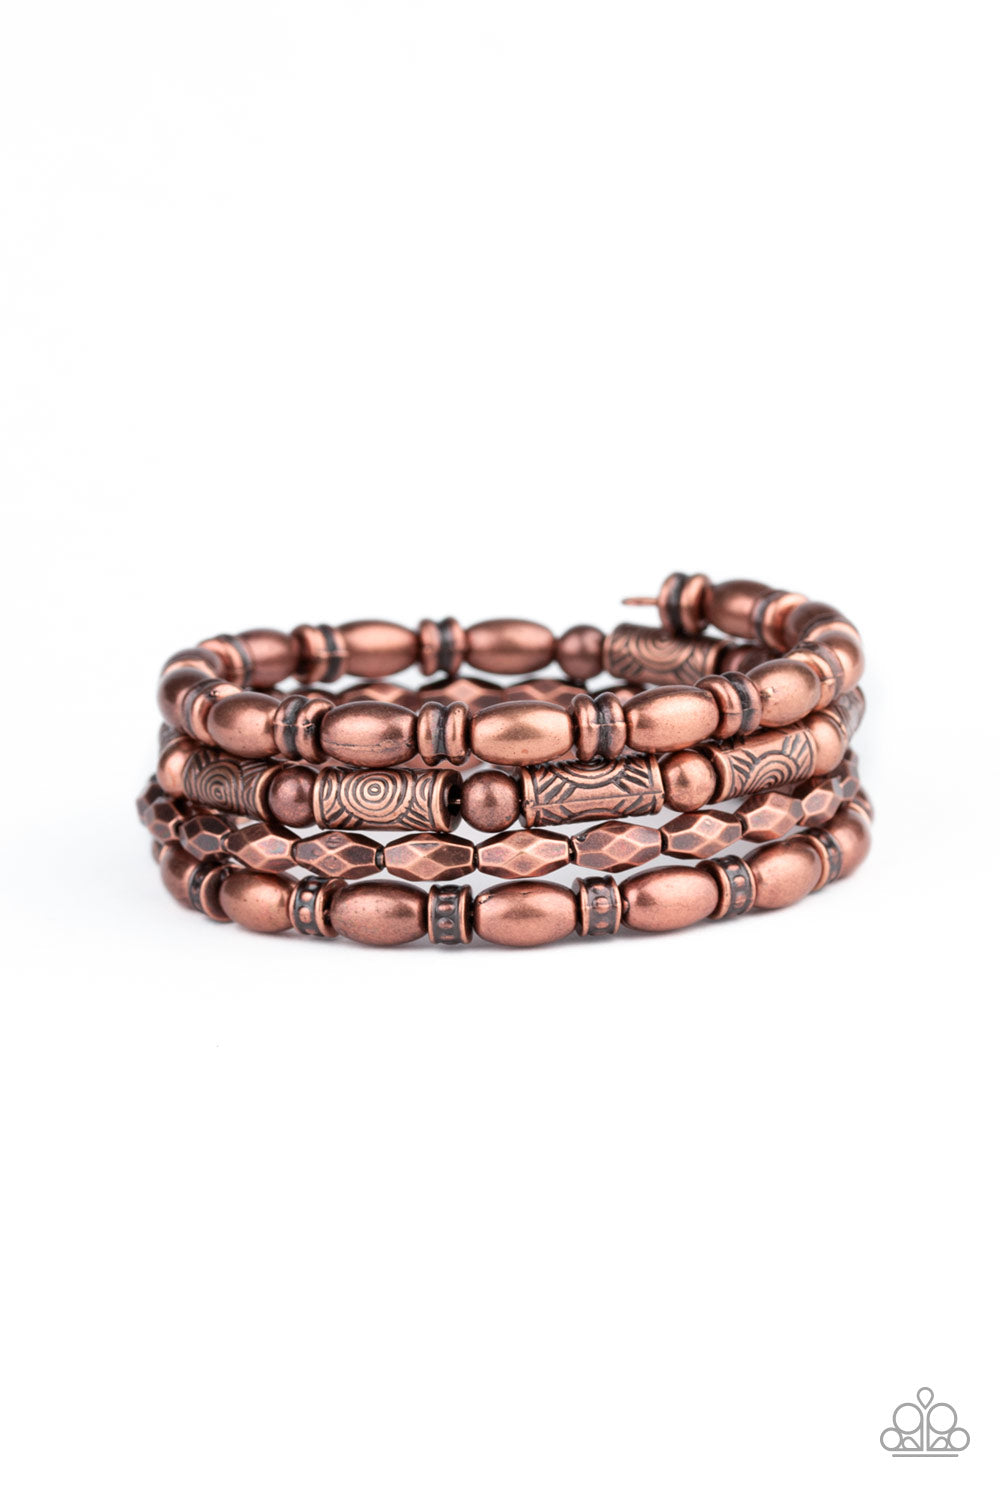 Texture Throwdown - Copper Bracelet